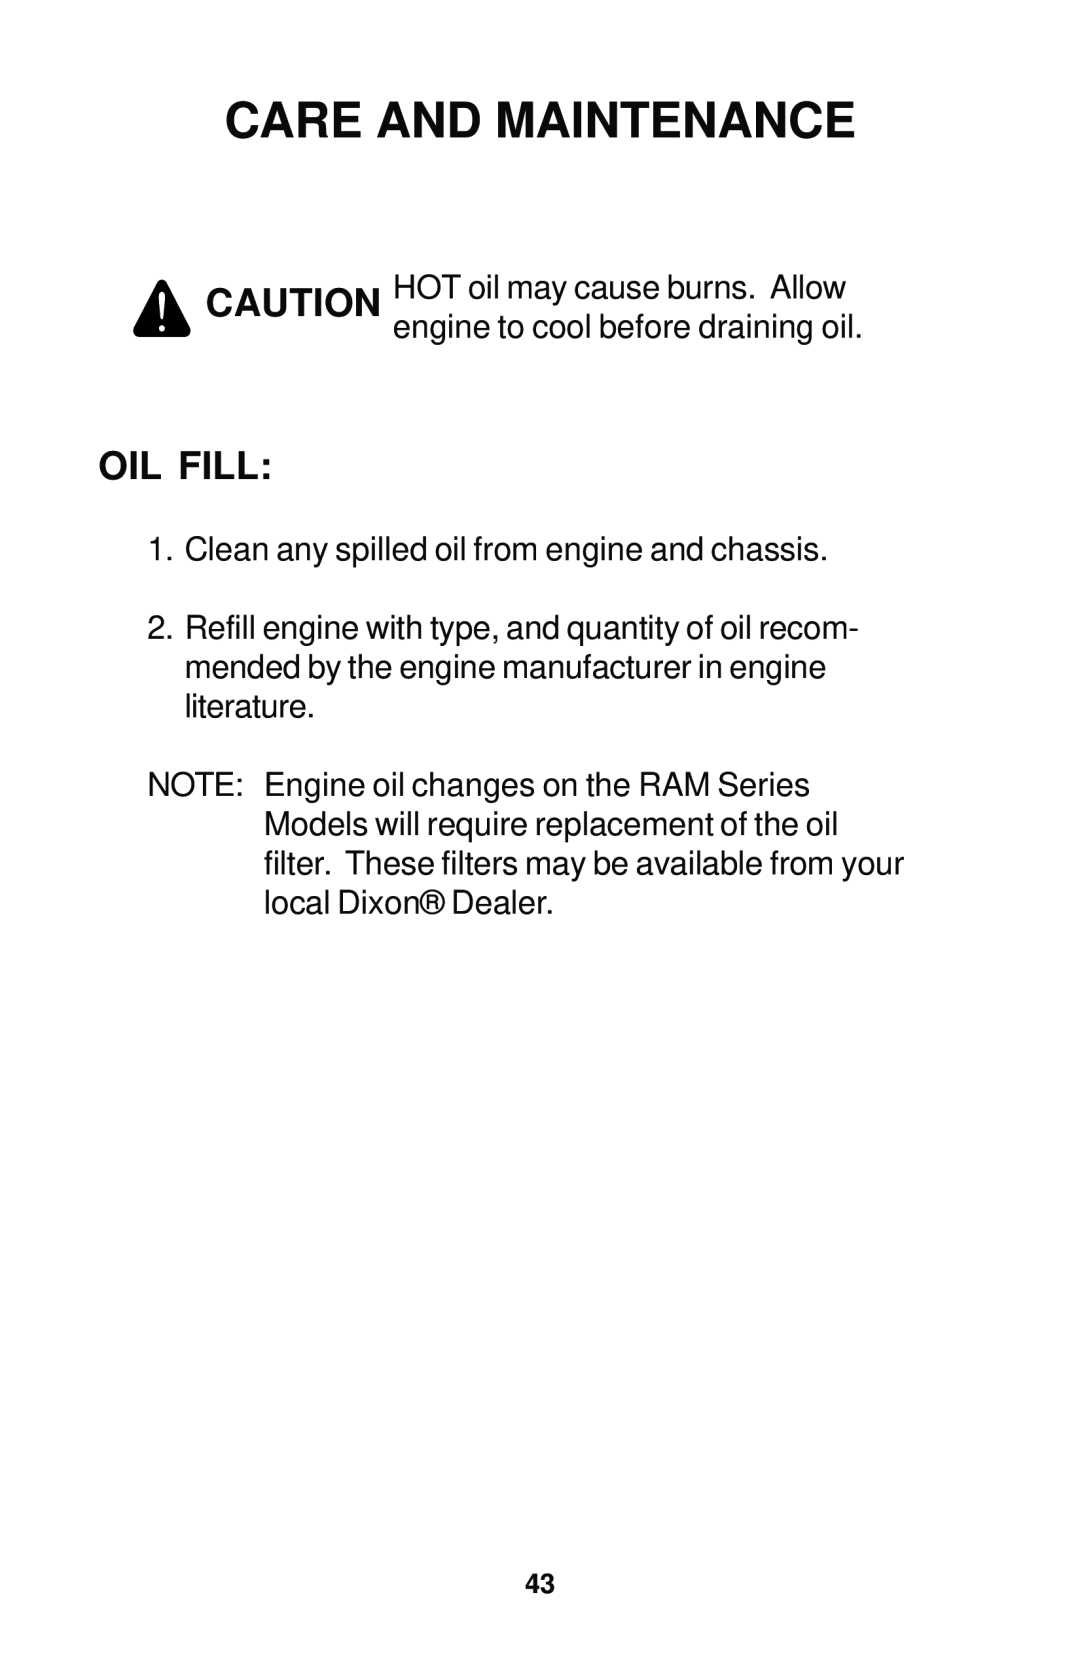 Dixon 17823-0704 manual Oil Fill, Care And Maintenance 